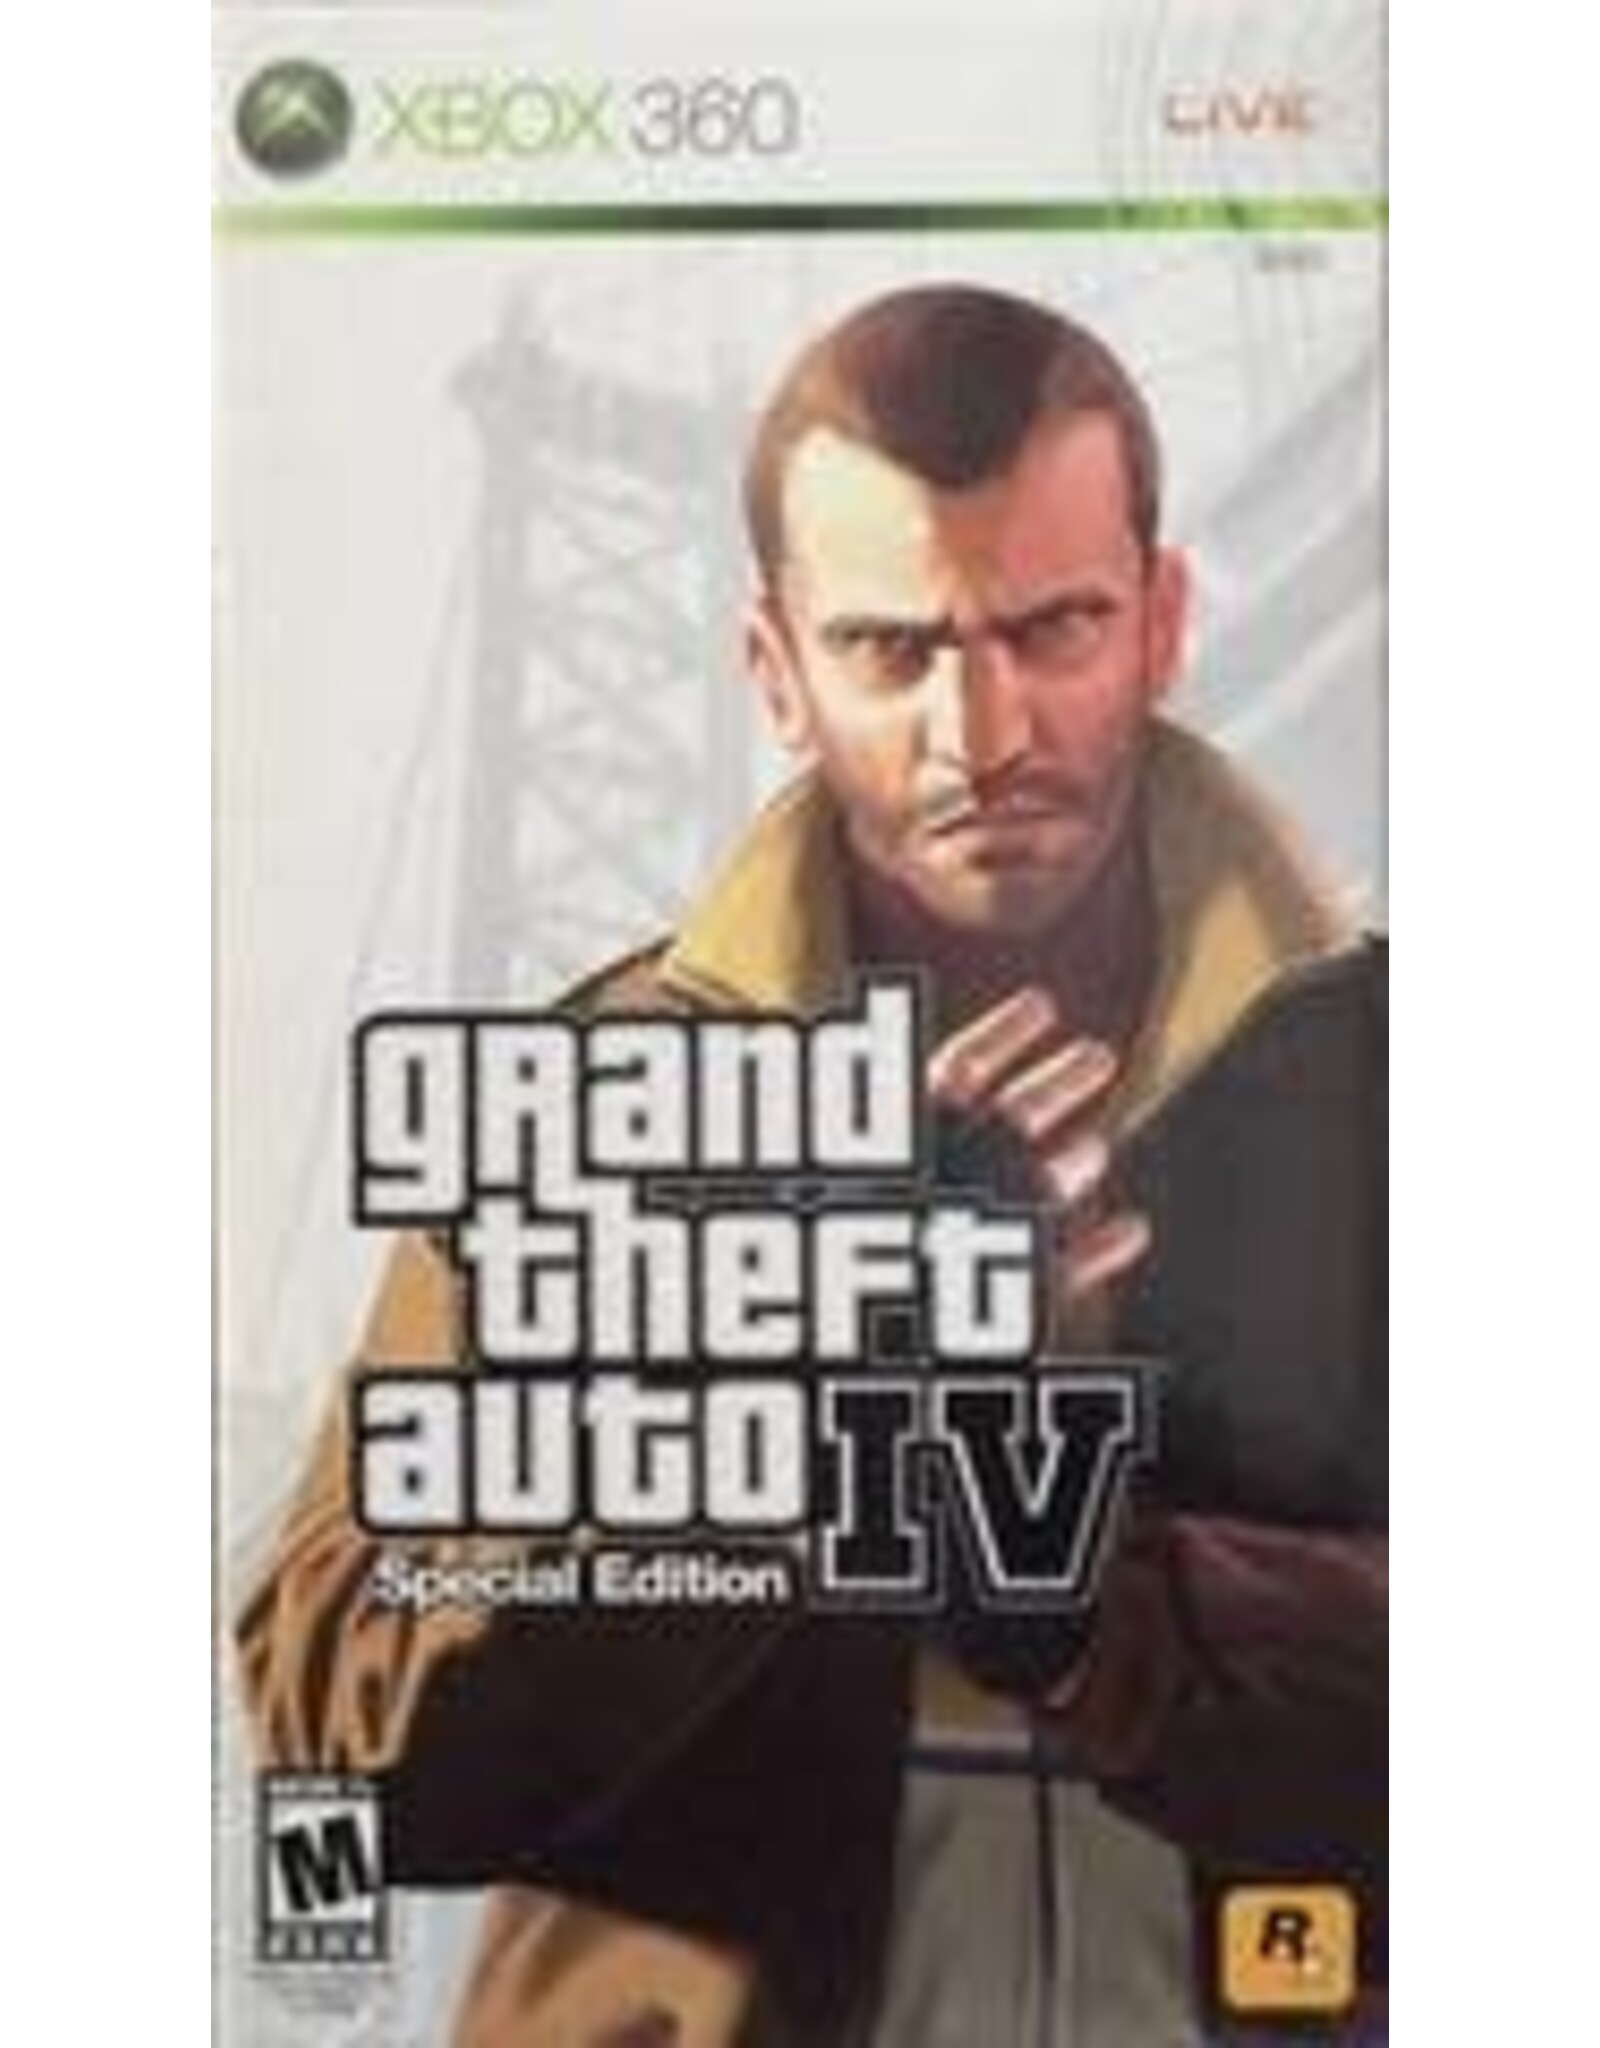 Xbox 360 Grand Theft Auto IV Special Edition (CiB)